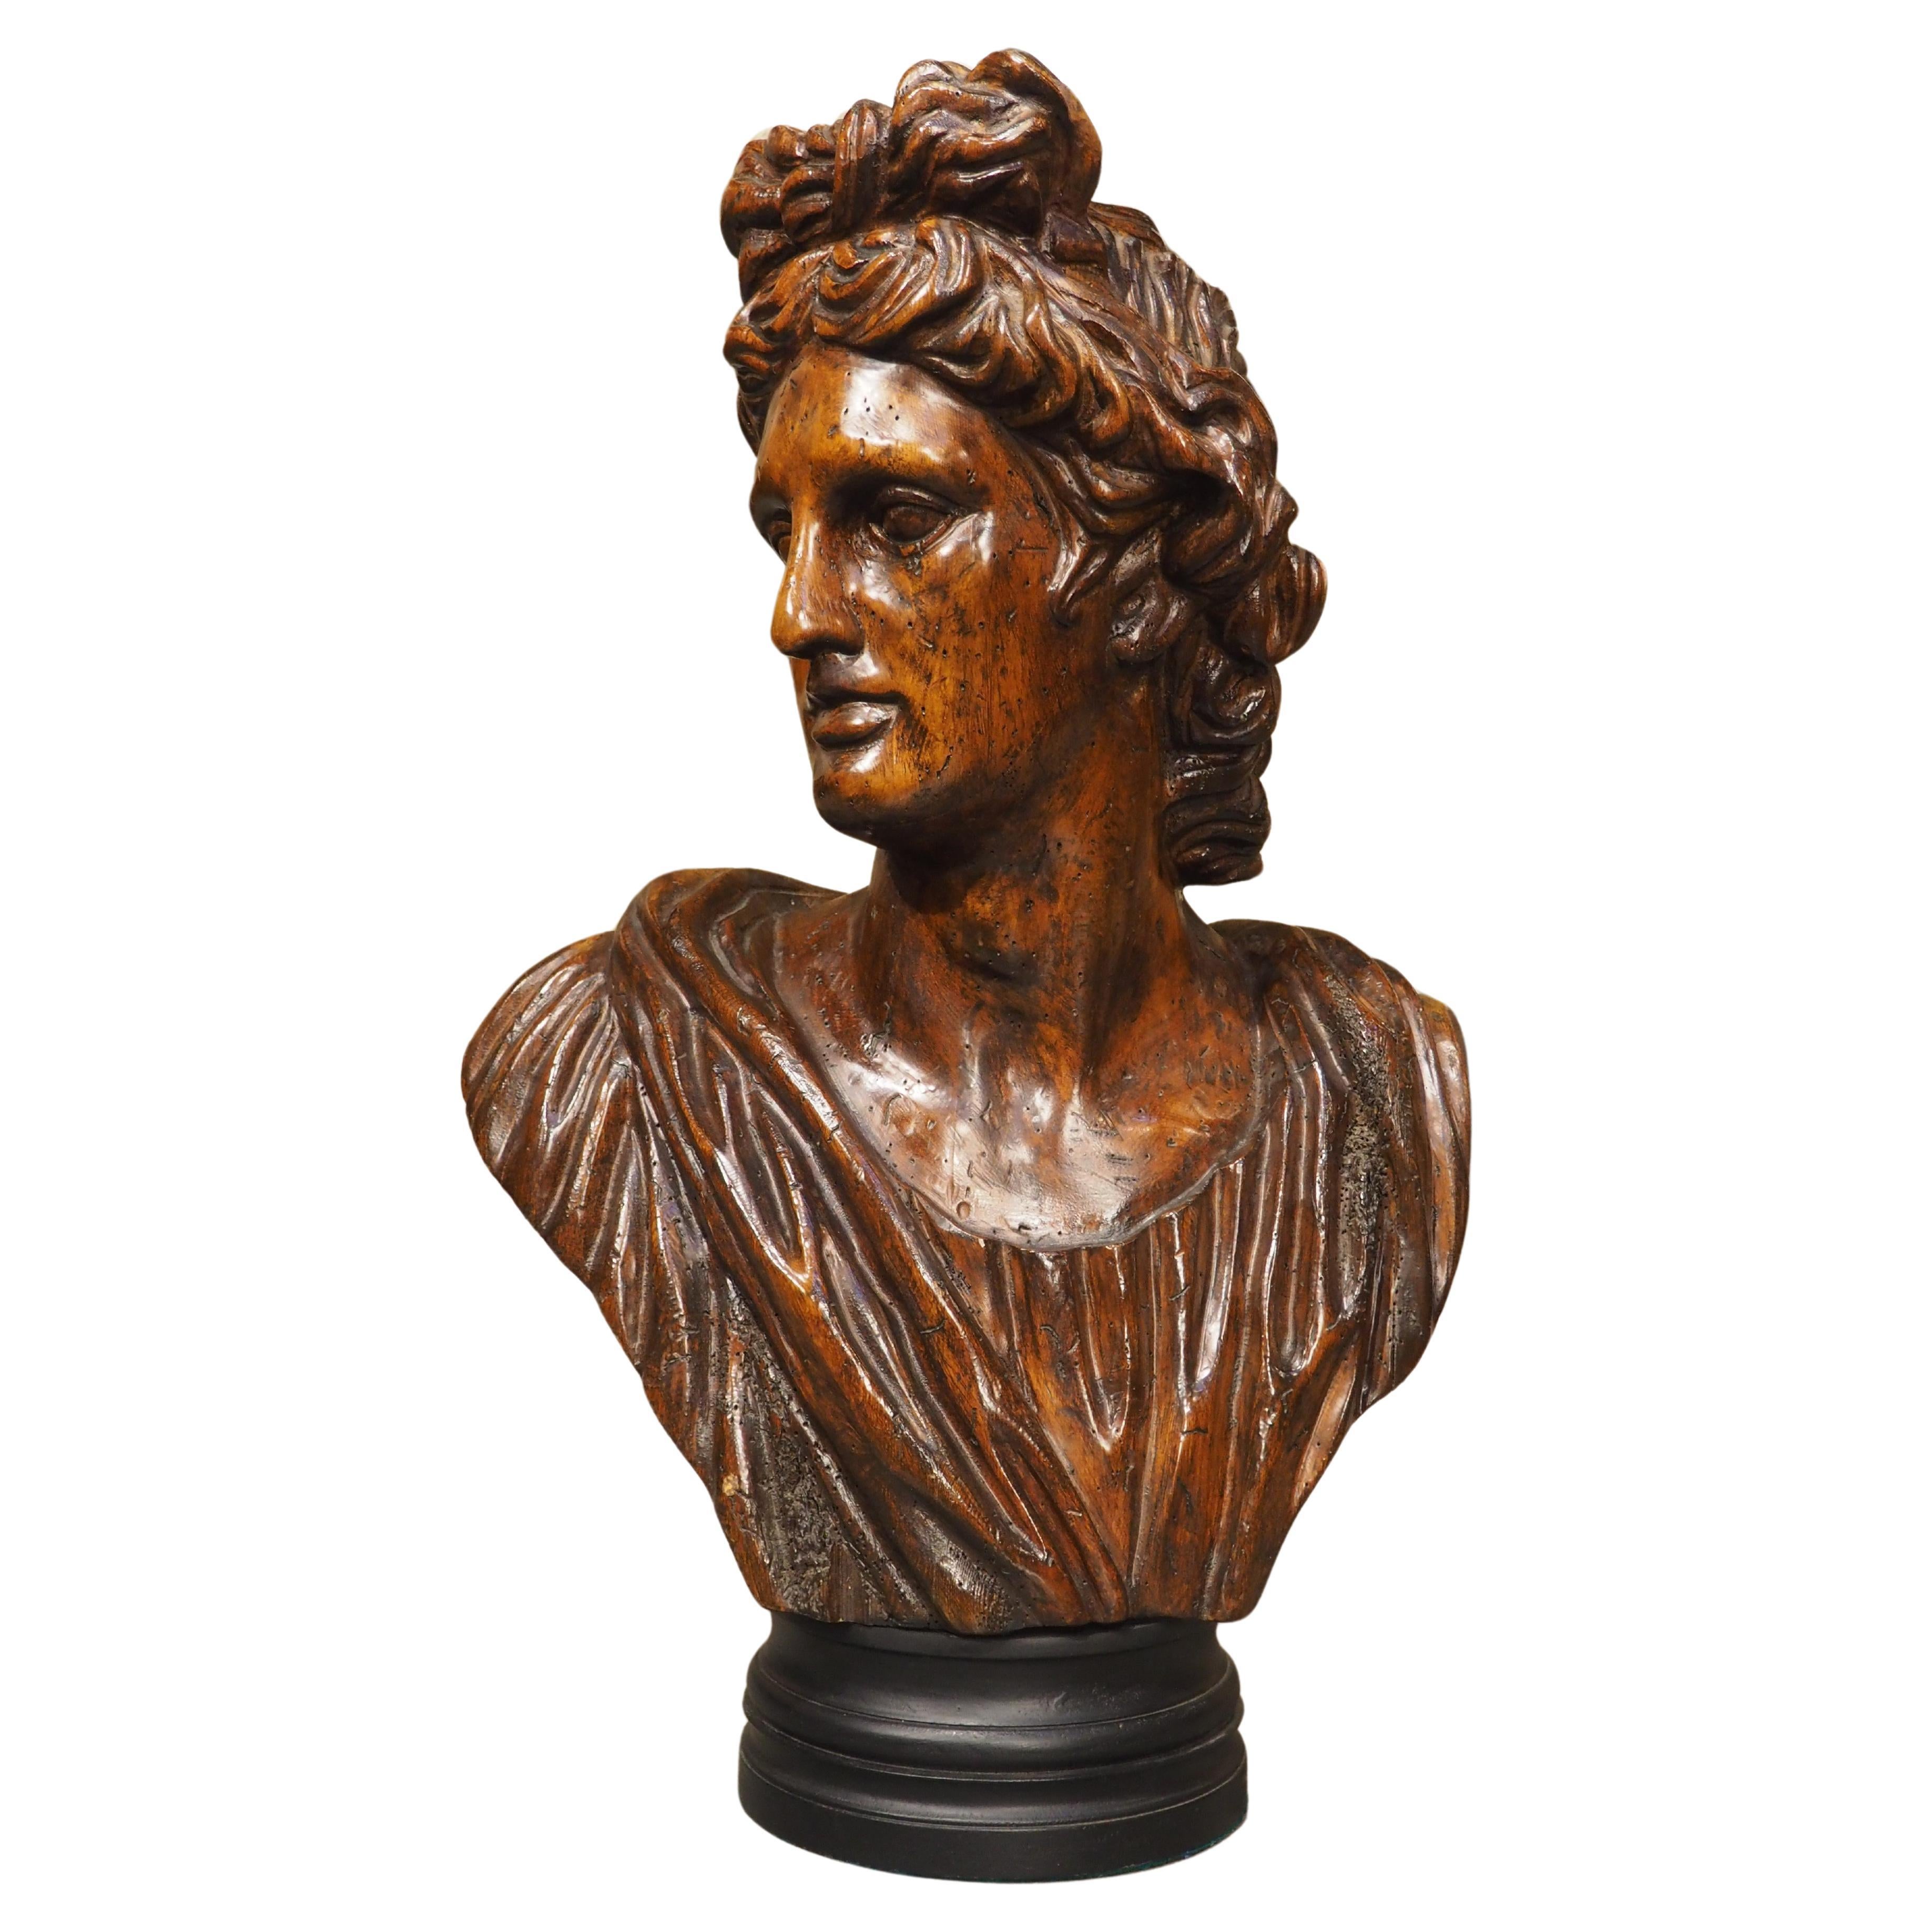 Antique Italian Wooden Bust of Apollo Belvedere, 19th Century